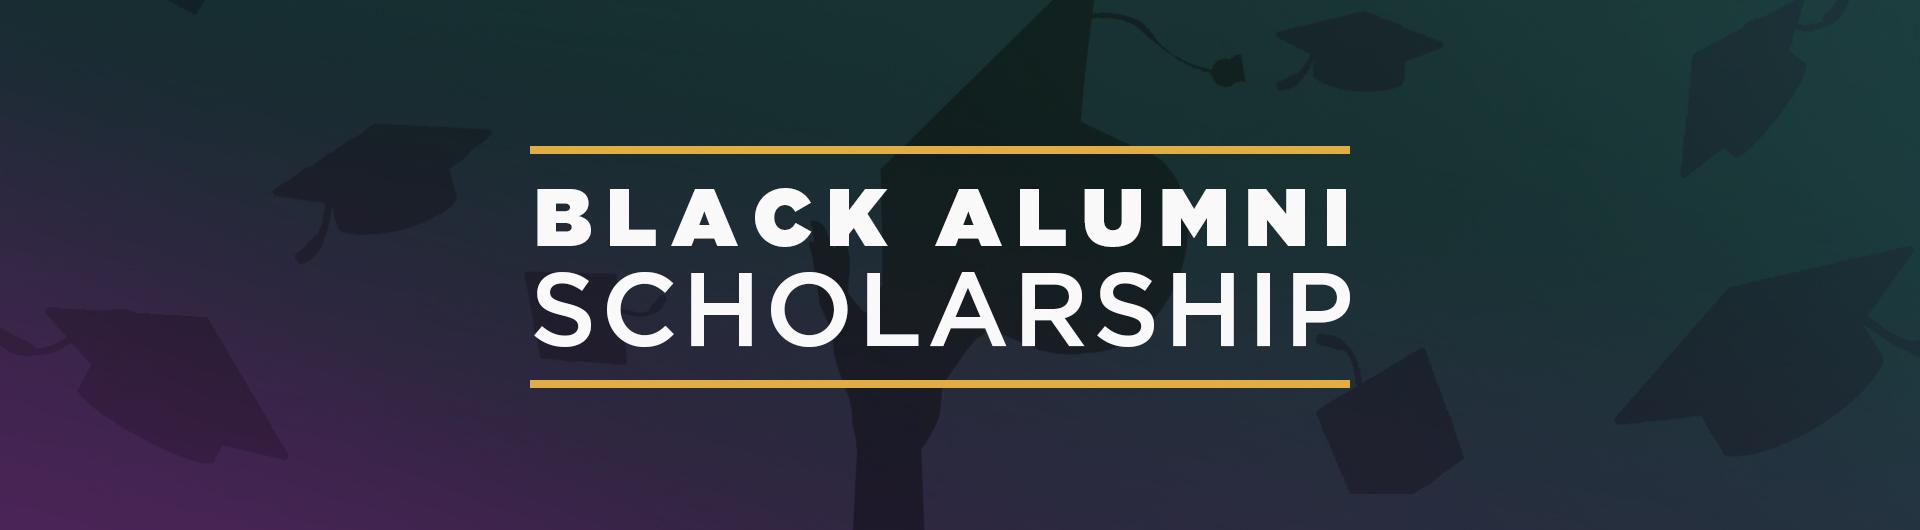 Black Alumni Scholarship Banner